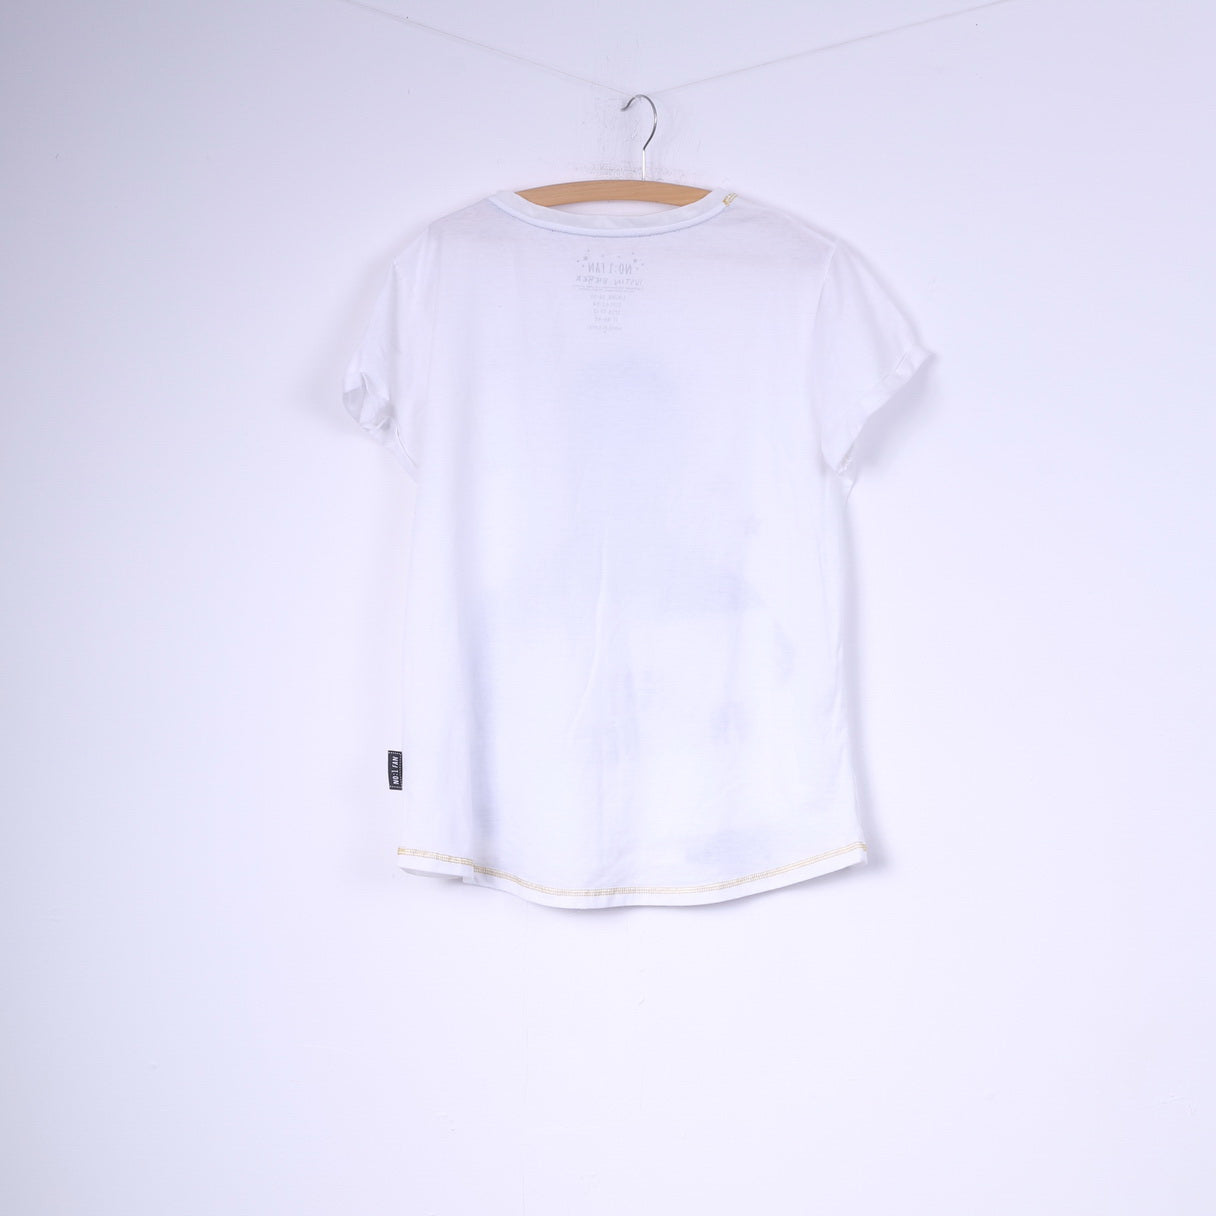 Primark Justin Bieber Womens 14-16 42-44 XL T-Shirt Graphic Cotton White Top